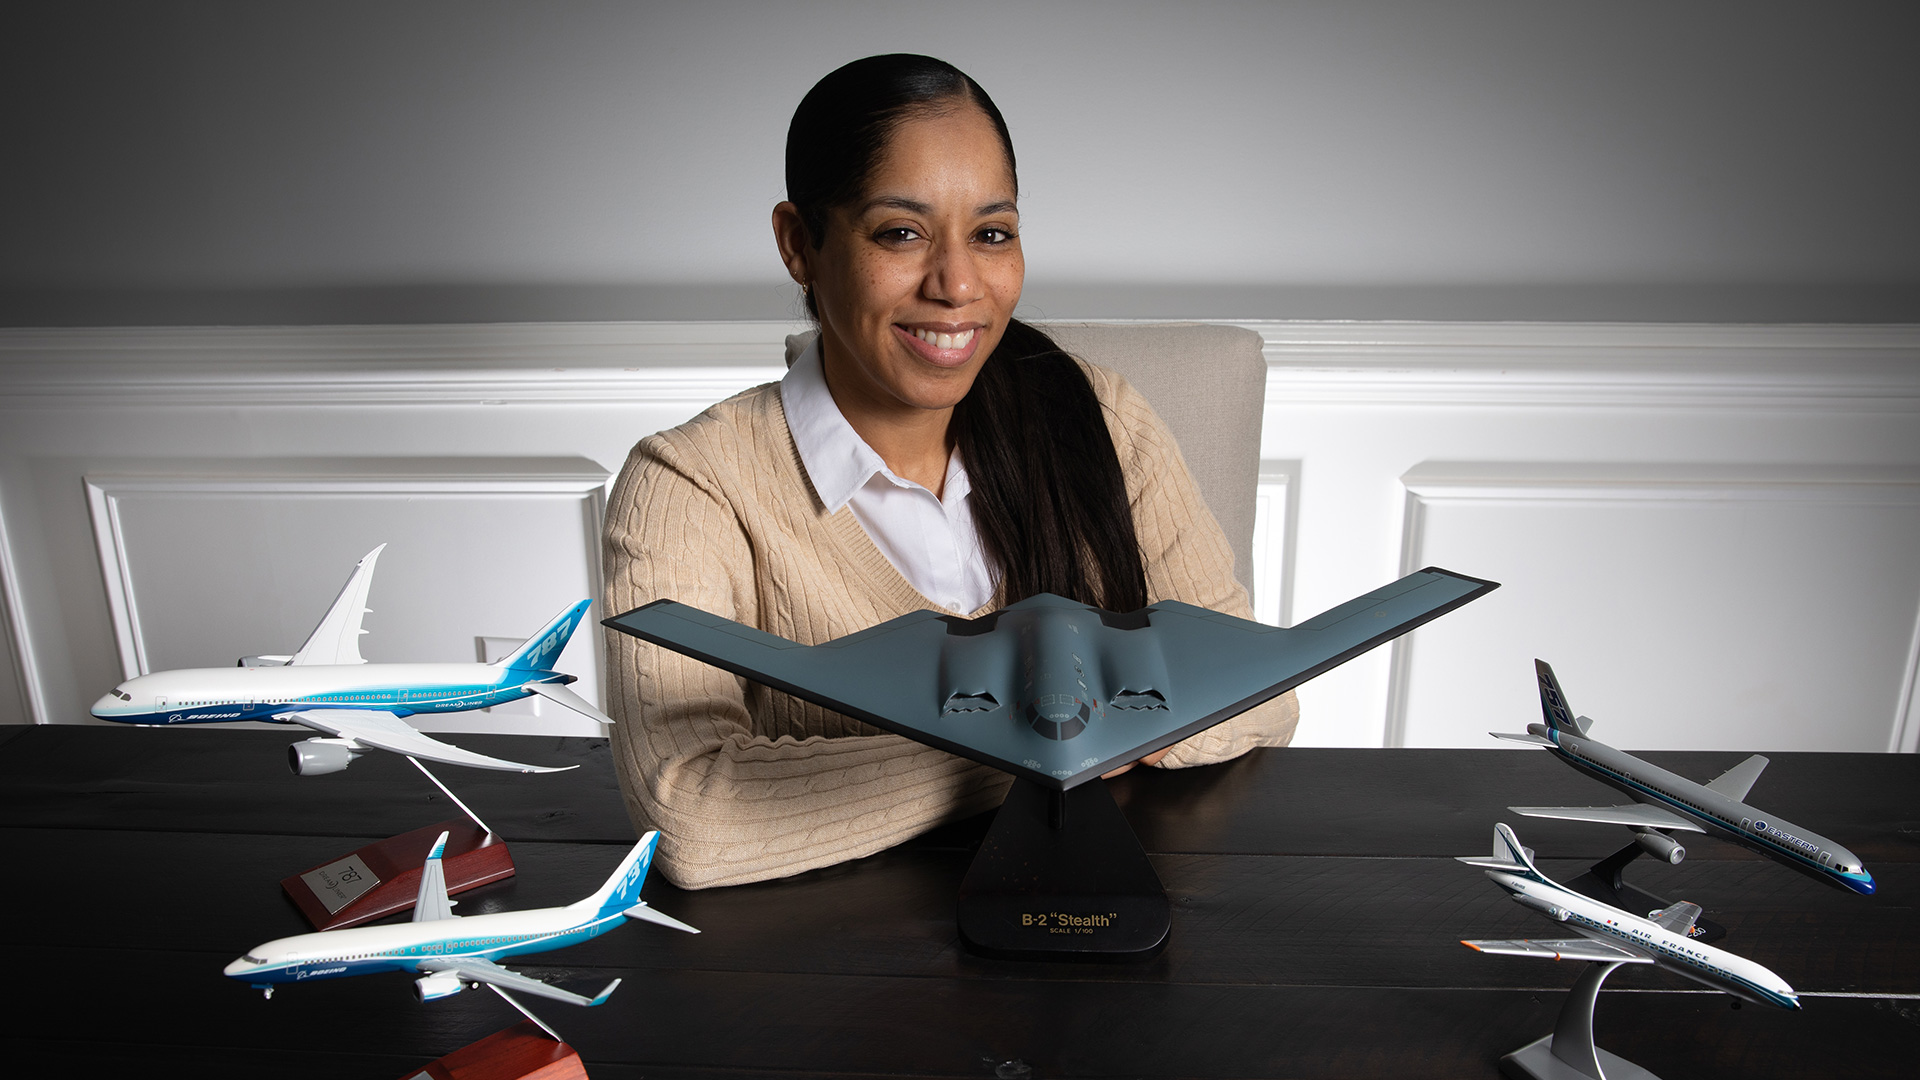 Sharaé Meredith sits behind five model aircraft